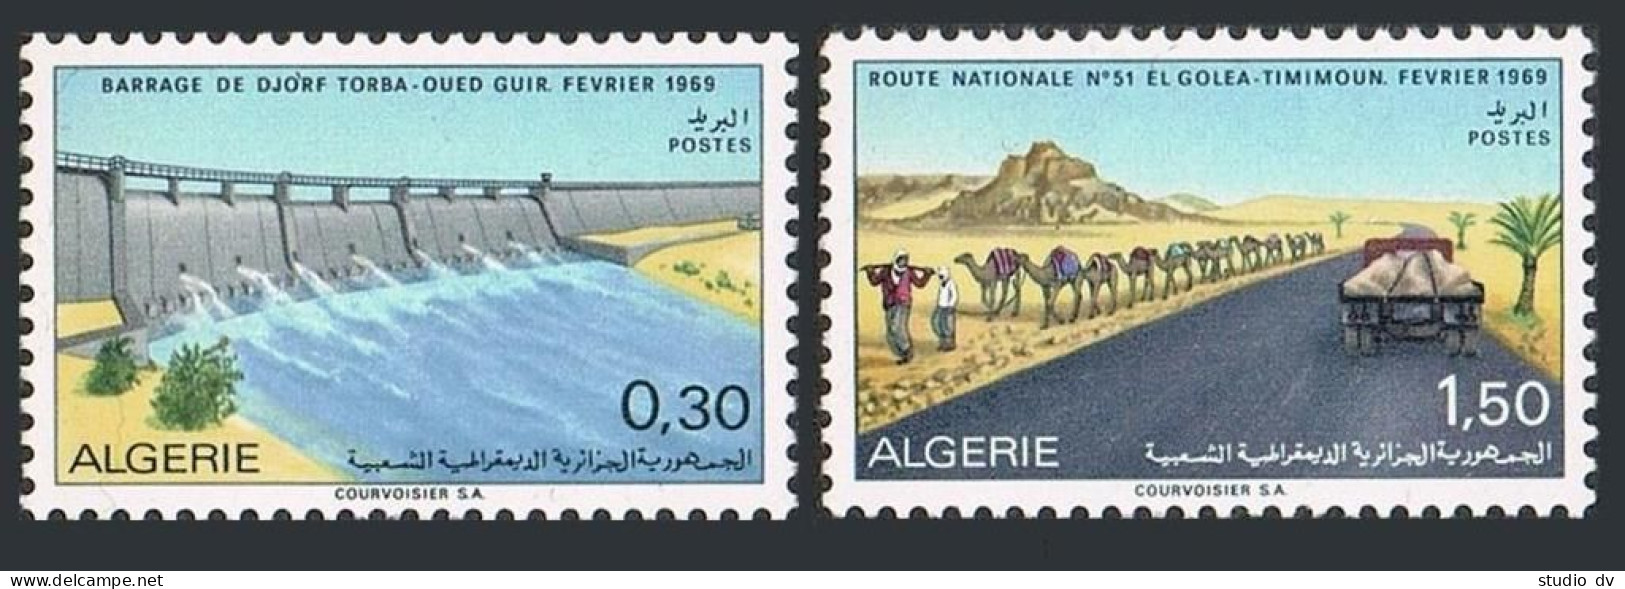 Algeria 415-416,MNH.Michel 521-522 Irrigation Dam;Highway,truck,Caravan.1969. - Algeria (1962-...)